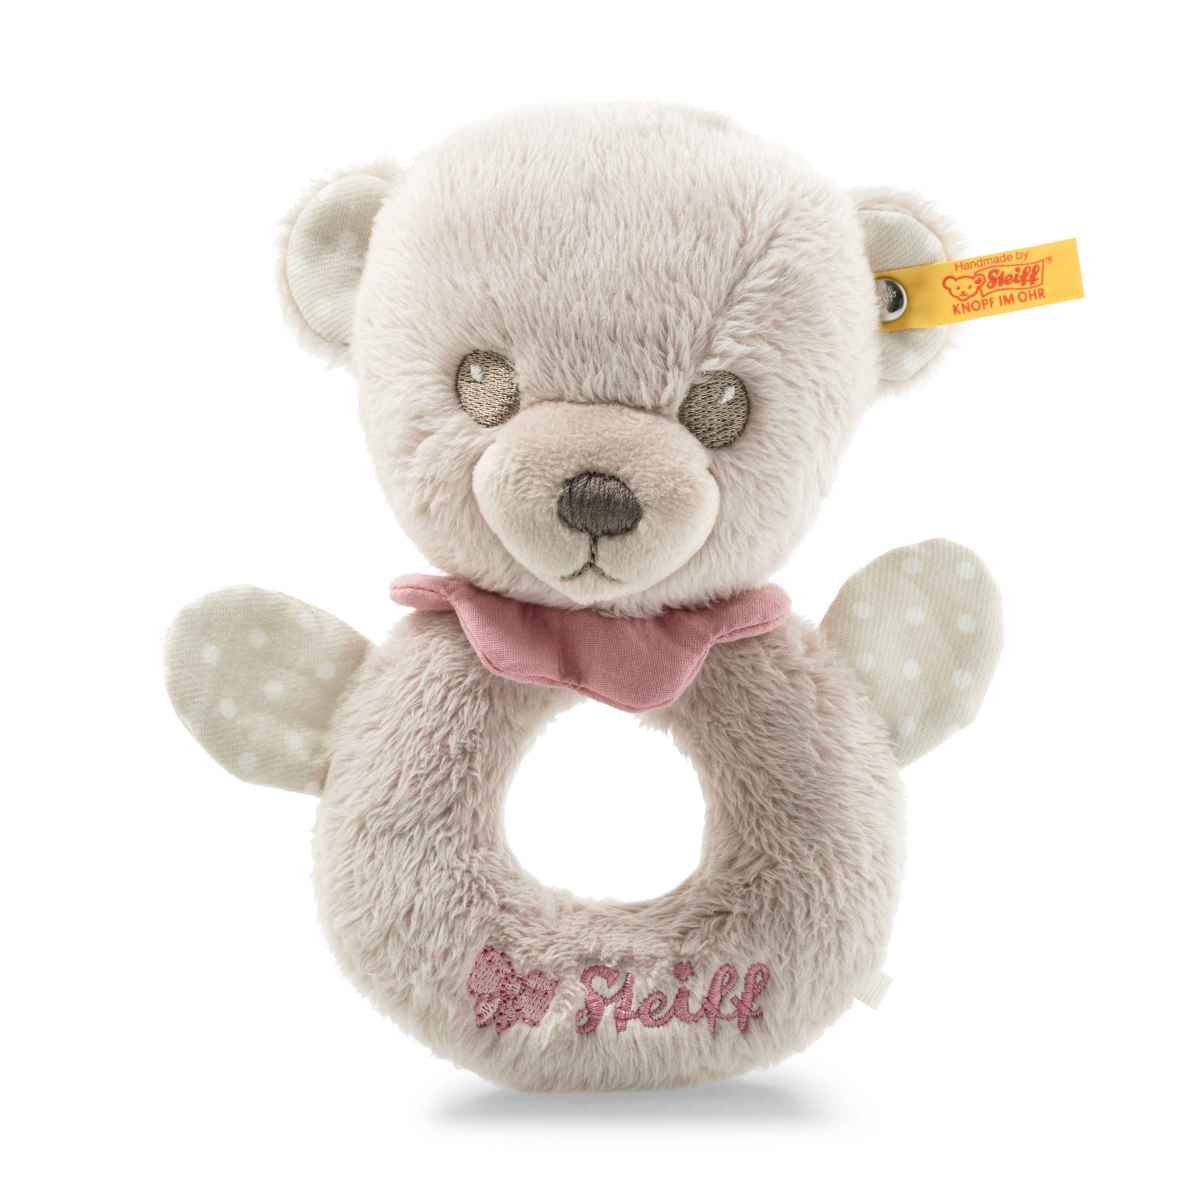 Погремушка Steiff Hello Baby Lea Teddy bear grip toy with rattle in gift box Штайф Мишка погремушка мишка тедди розовая 21